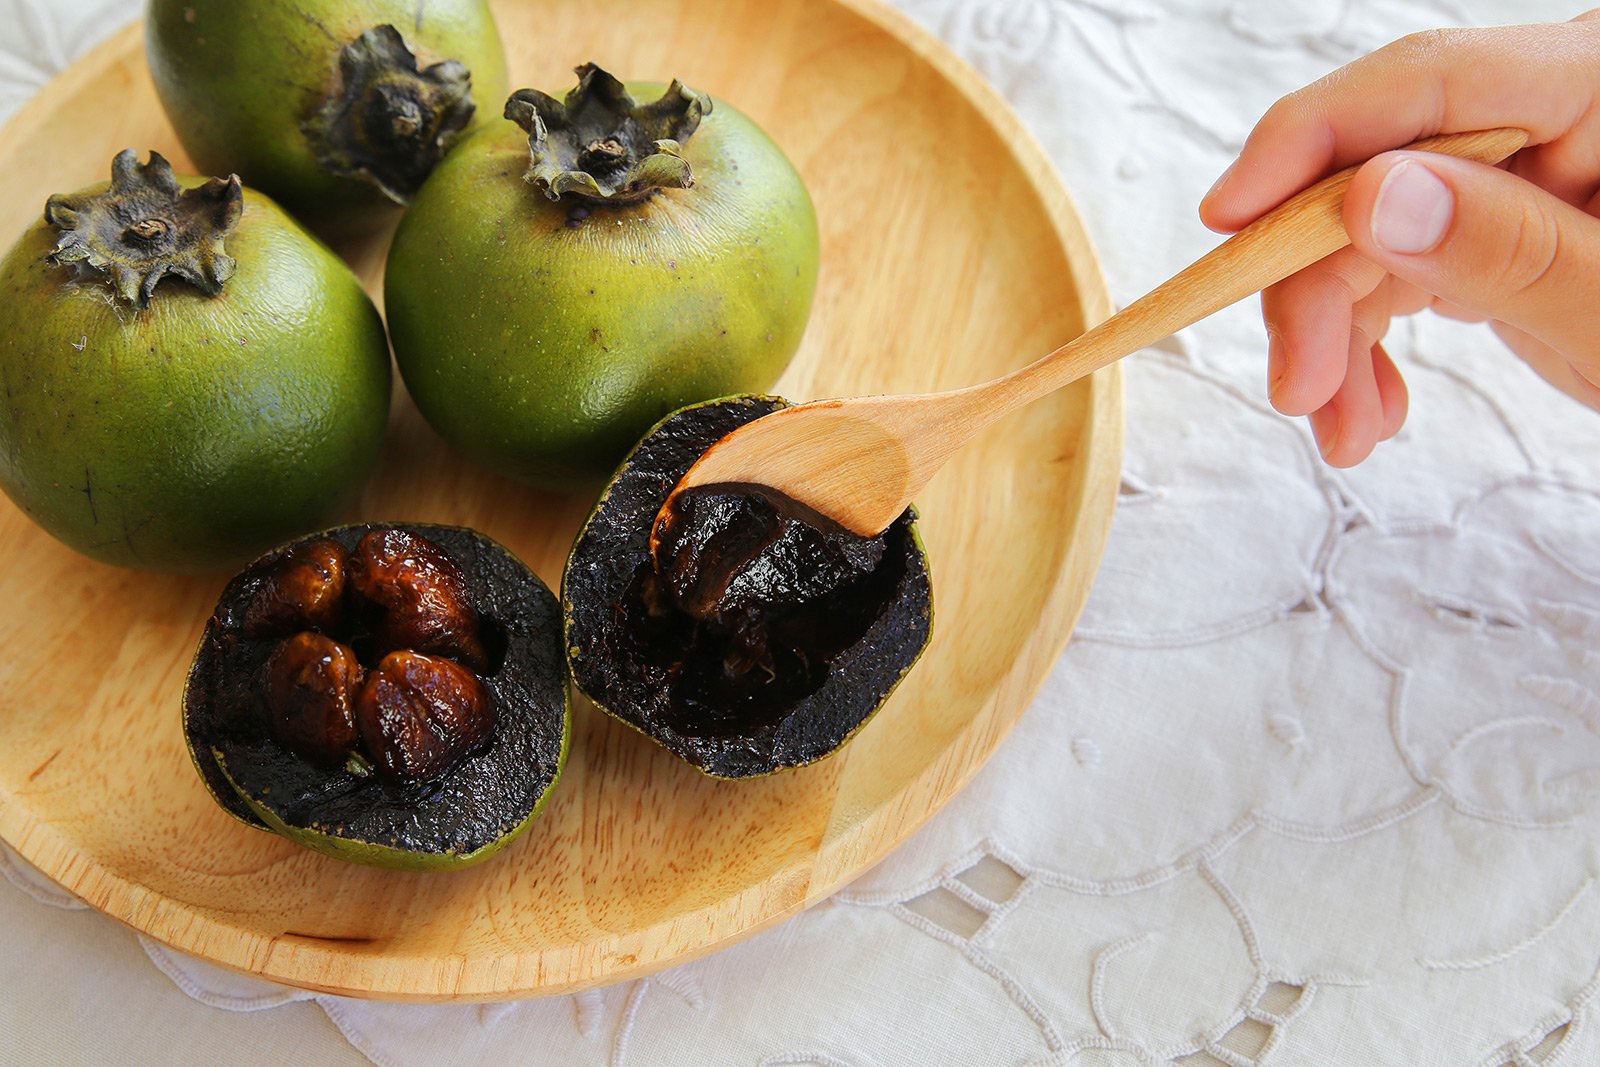 How to taste black sapote fruit in Port Louis